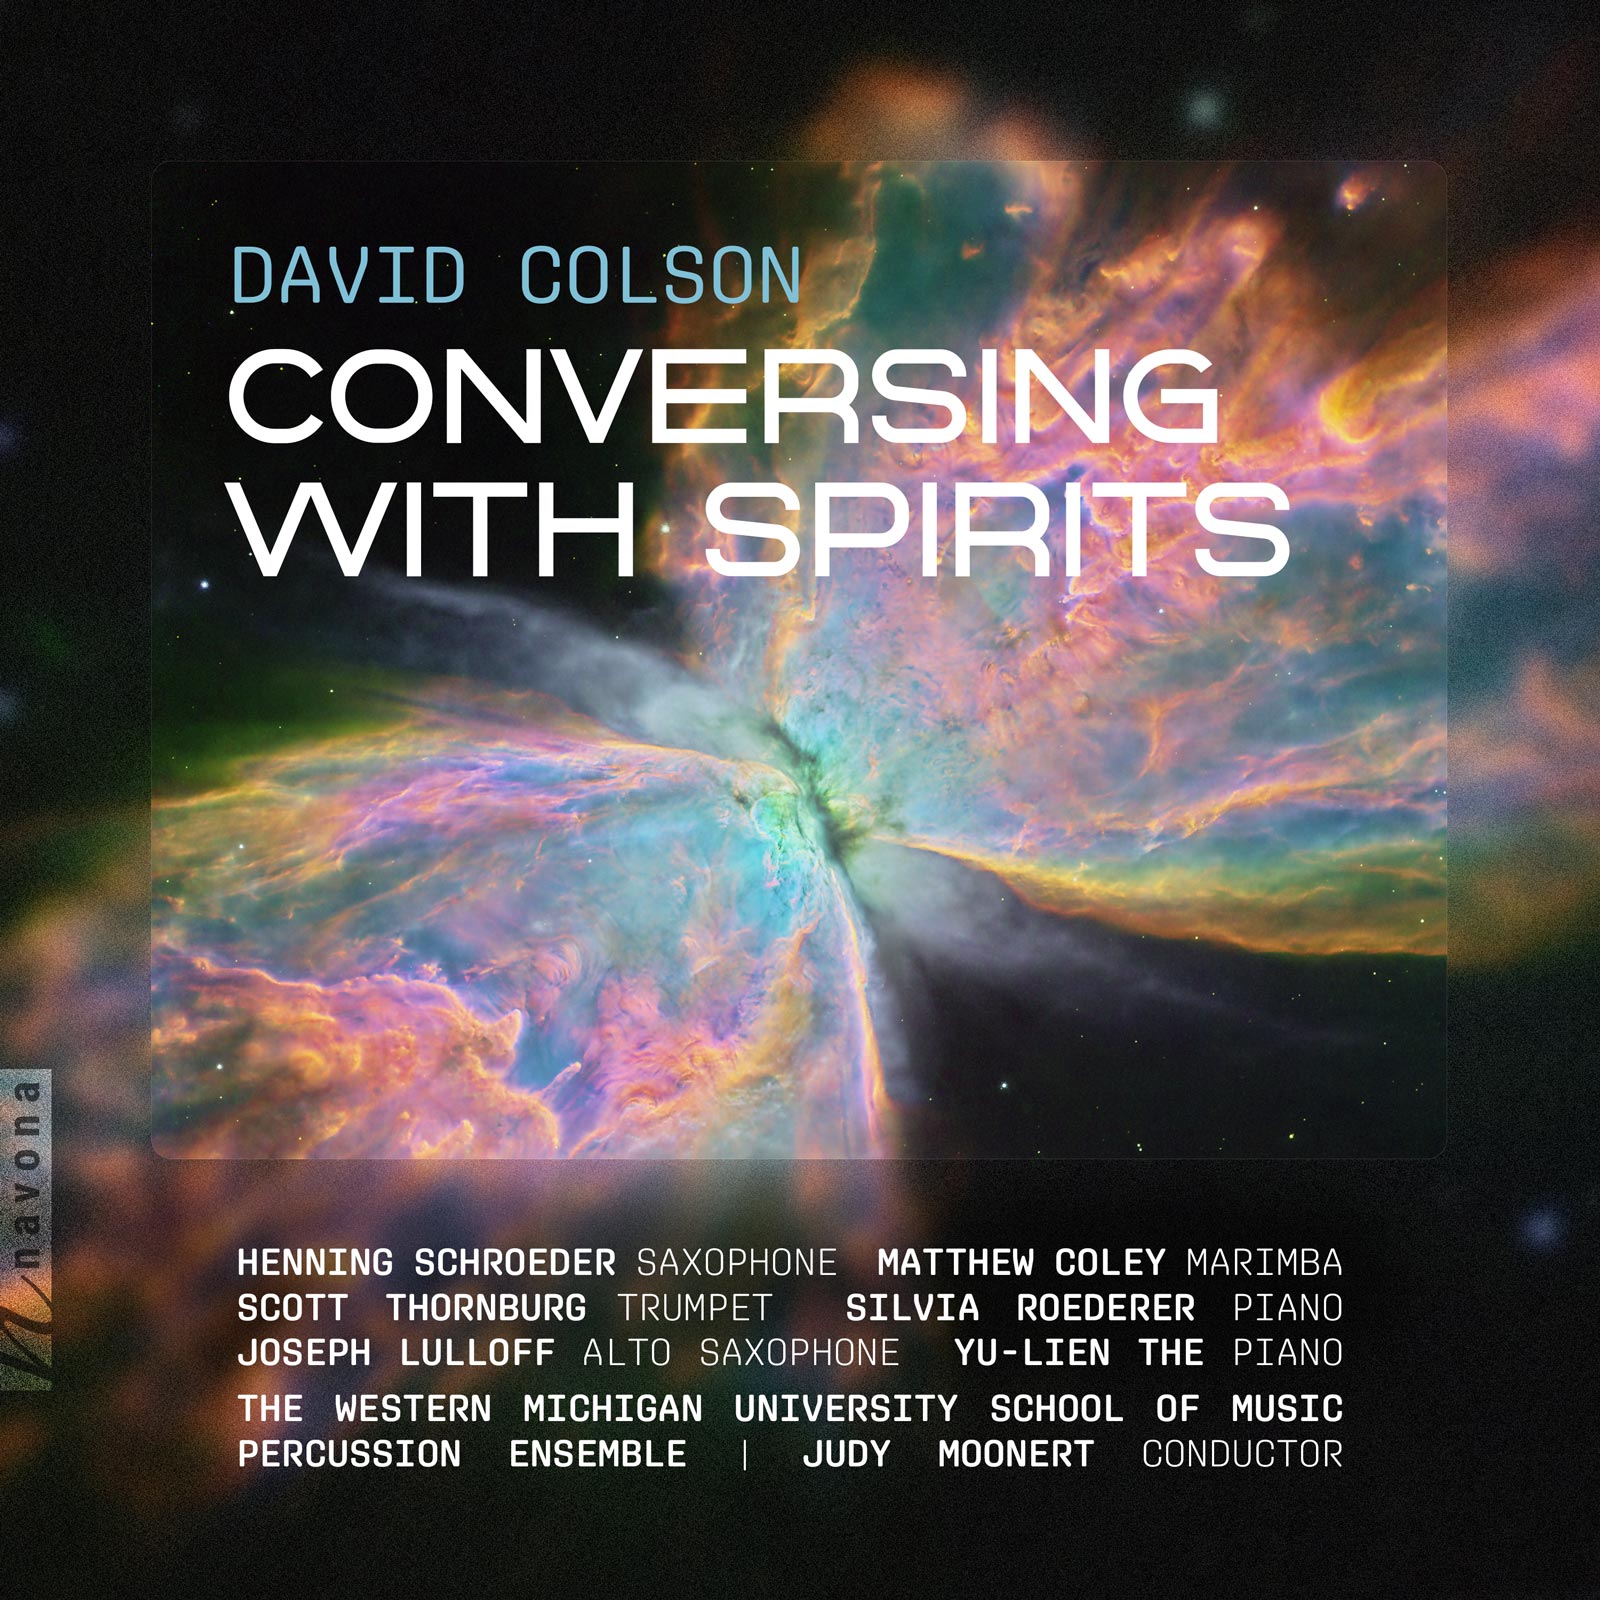 CONVERSING WITH SPIRITS